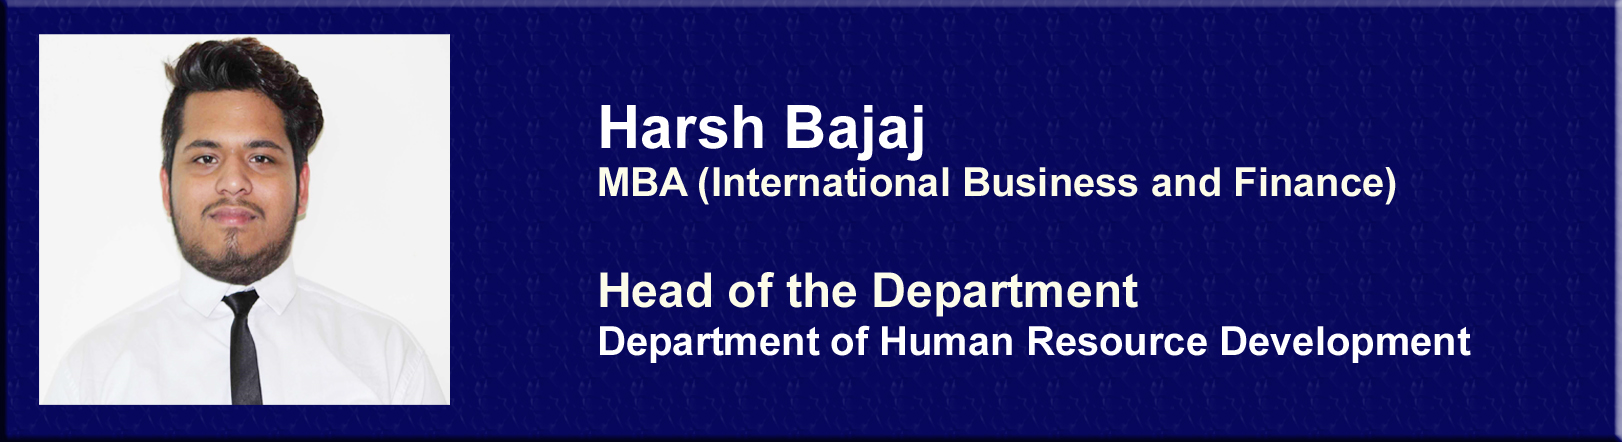 Harsh Bajaj-HOD- Department of Human Resource Development